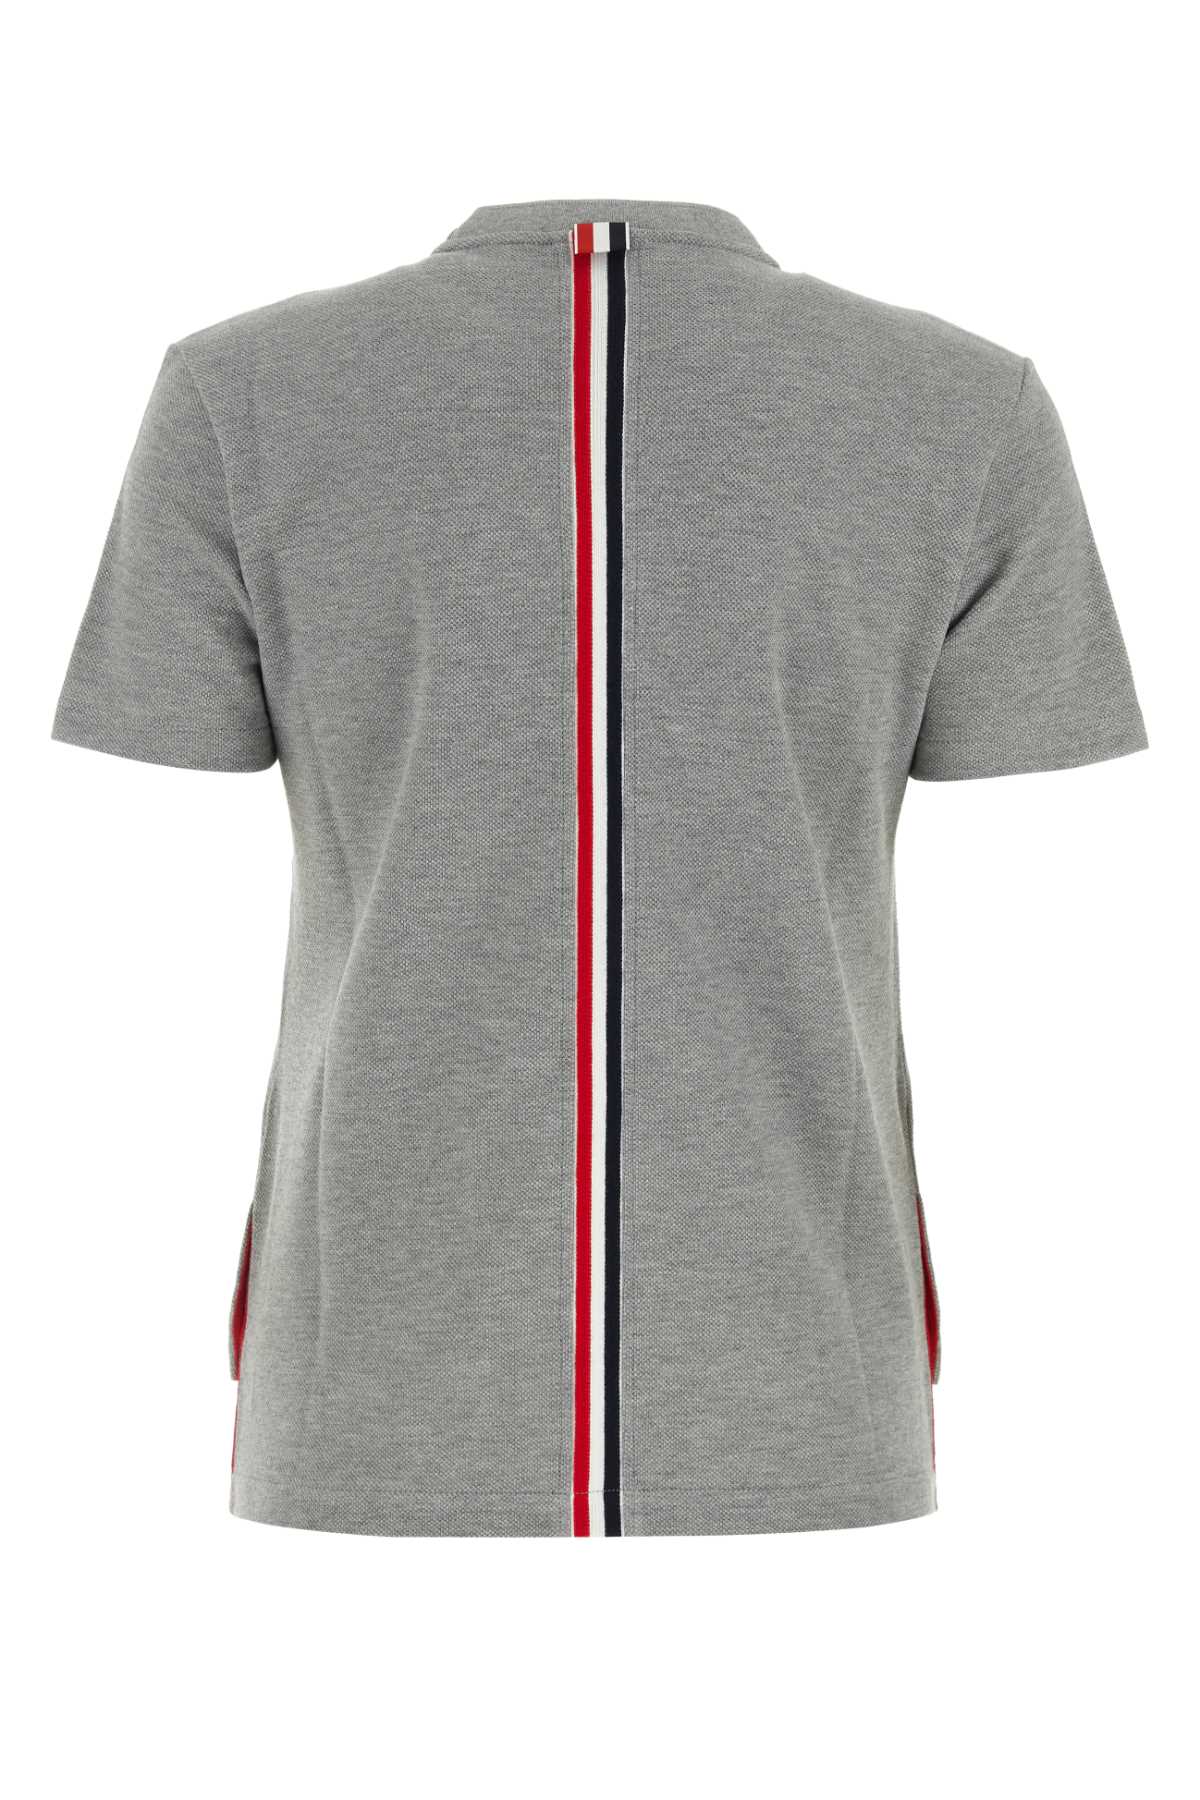 Thom Browne Grey Piquet T-shirt In 055